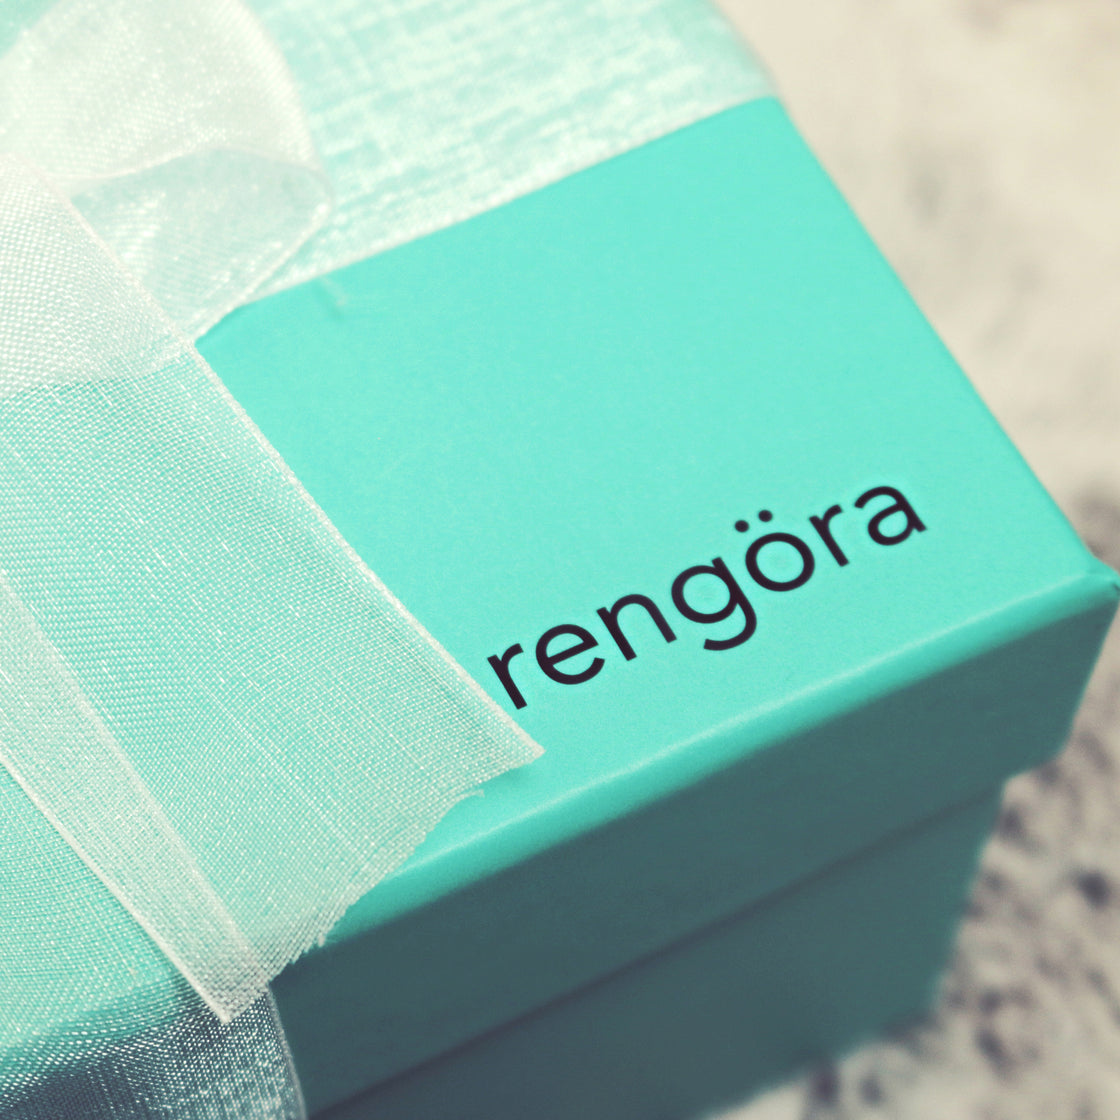 rengöra's beautiful turquoise blue bath bombs gift box